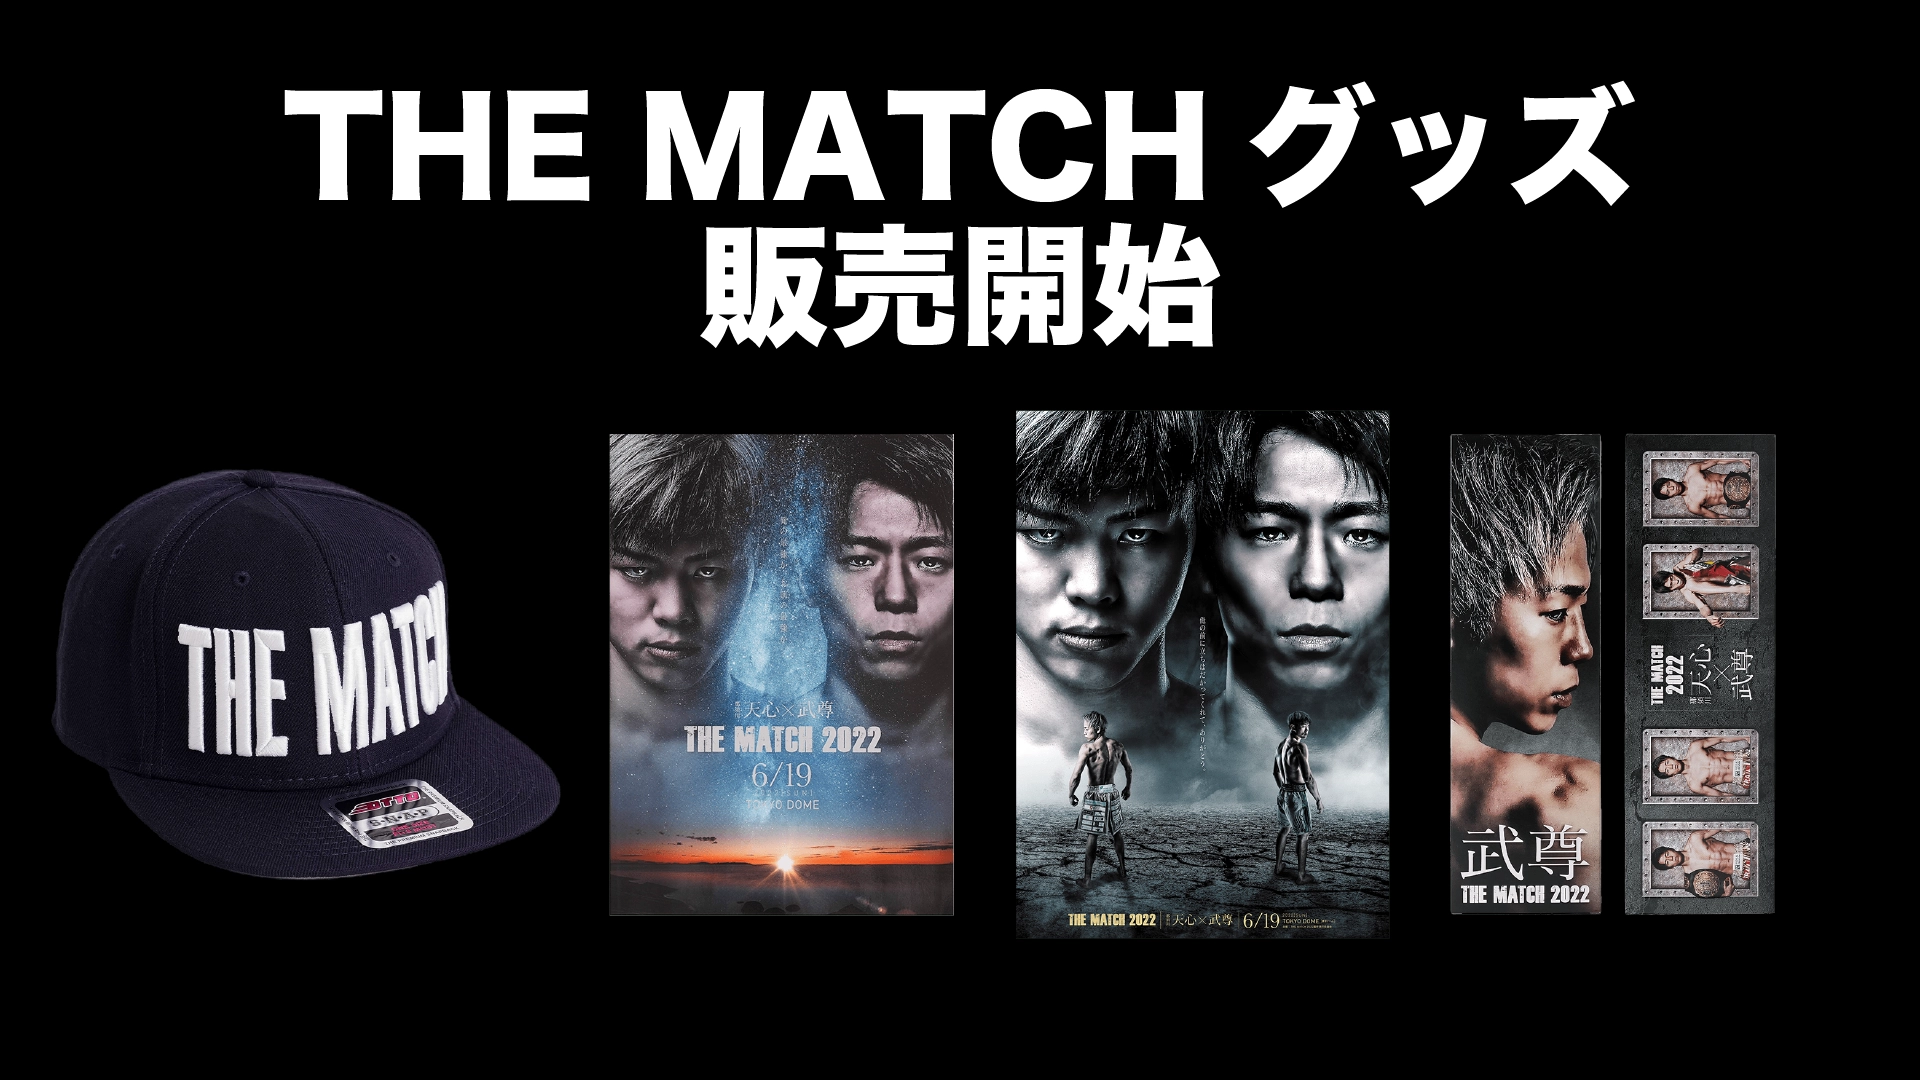 THE MATCH 2022」6.19東京ドーム大会 オフィシャルグッズがK-1福岡大会